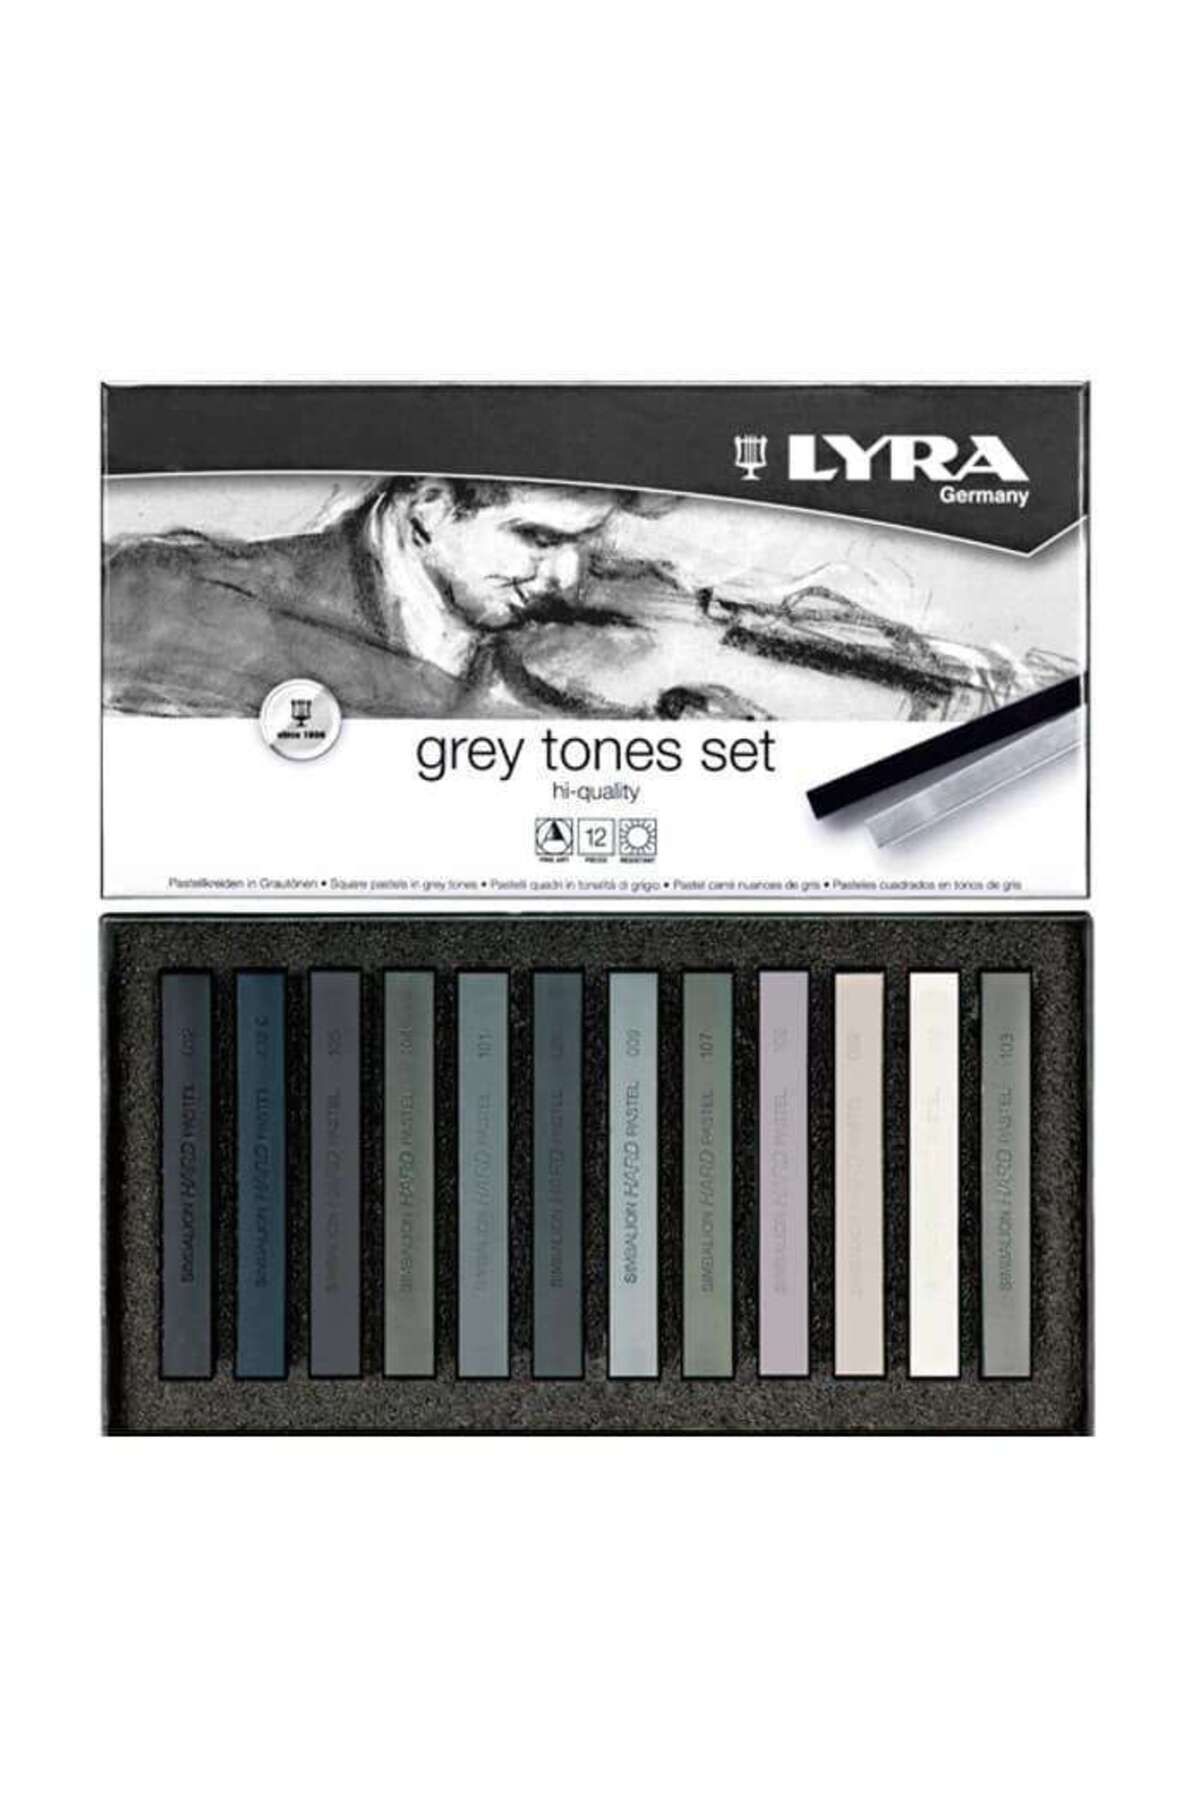 Lyra Hi-Quality Gri Tonları Pastel Seti 12’li